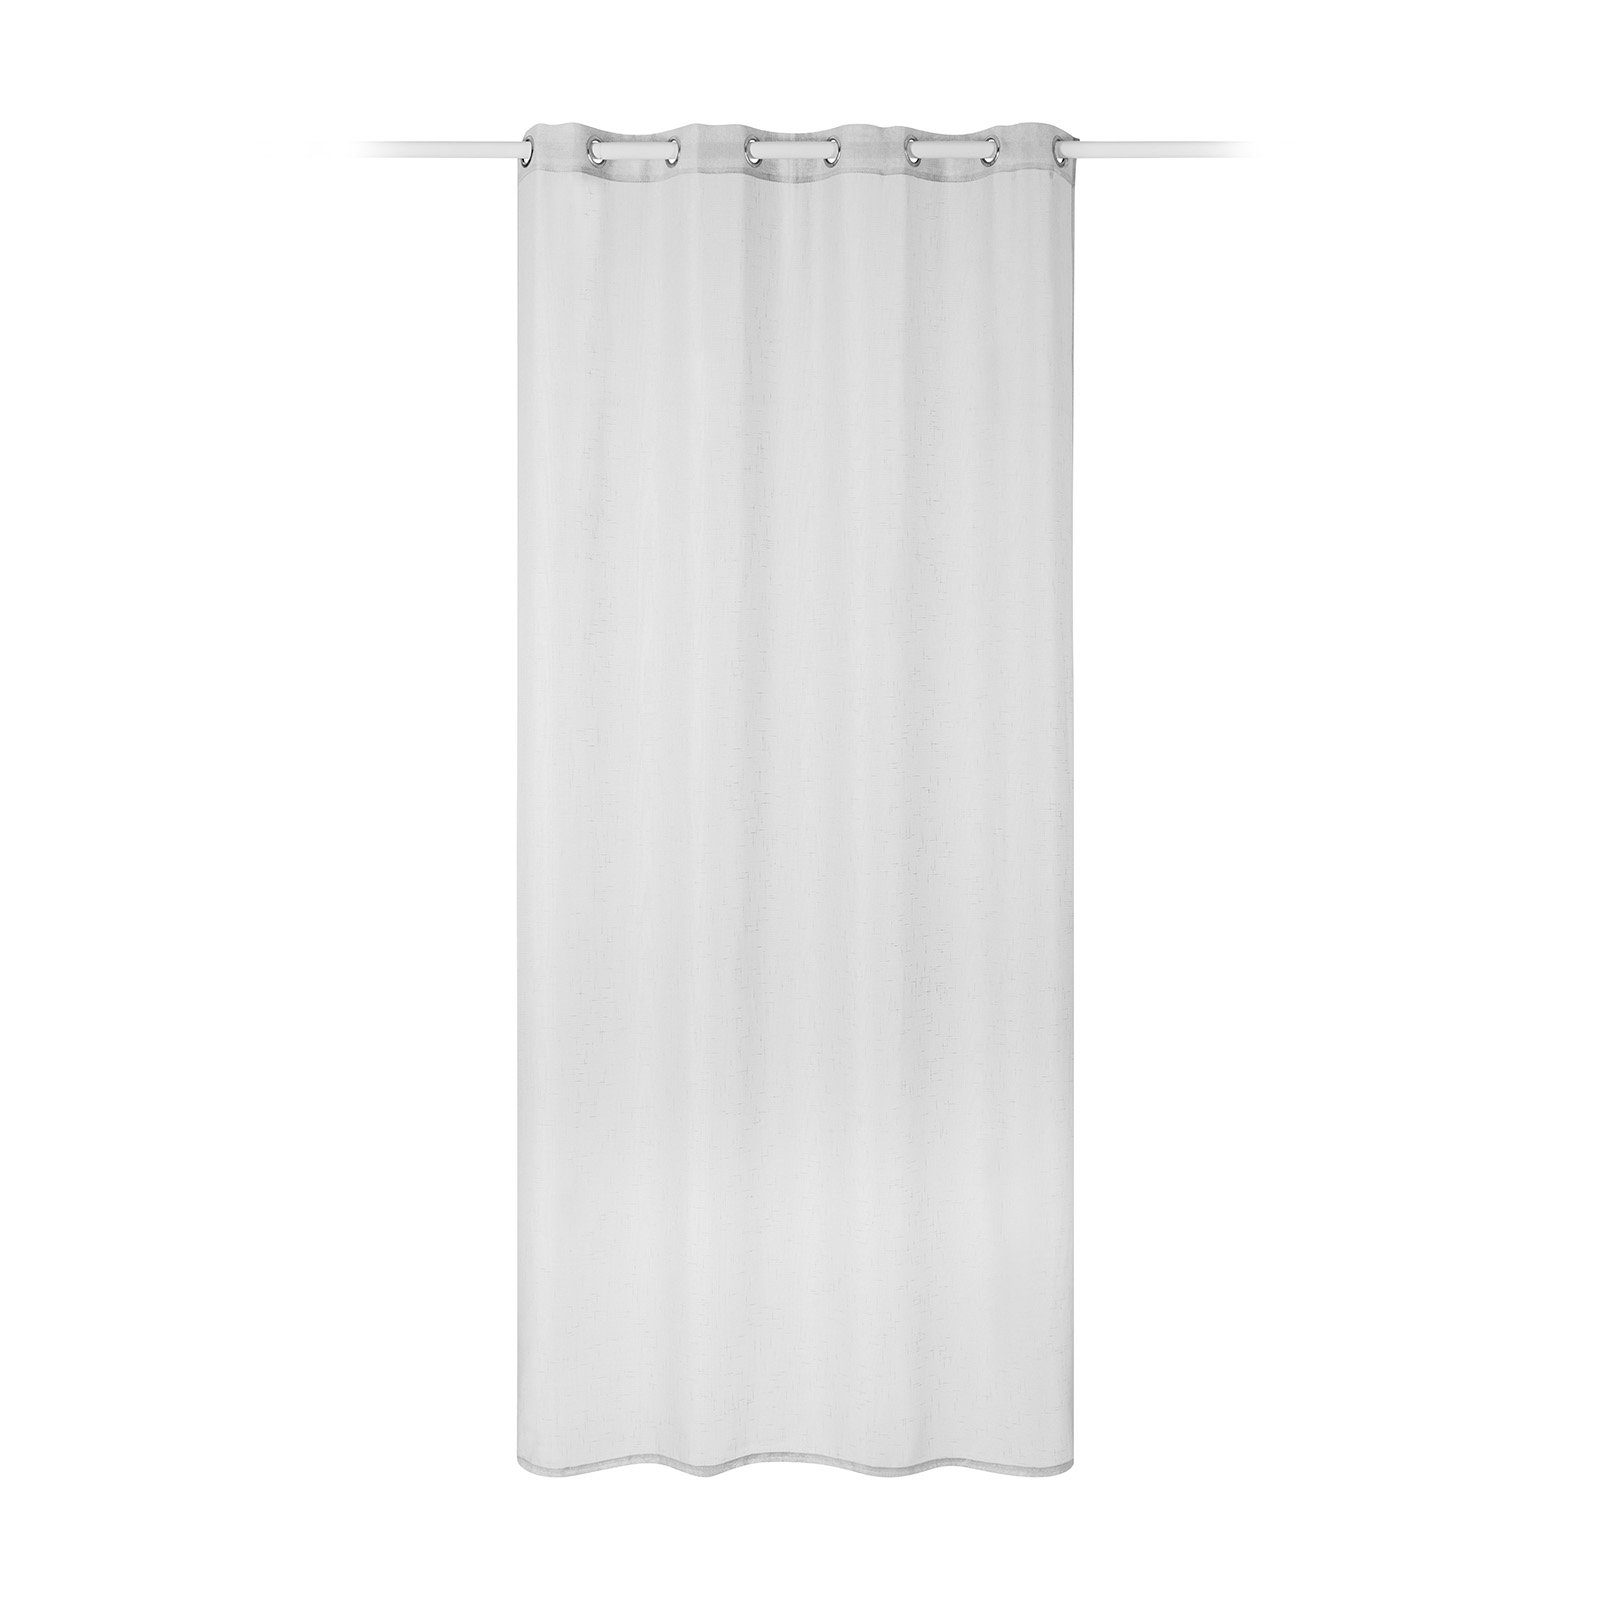 Ösen, Weiß 140x245cm, Leinenoptik, halbtransparent, Vorhang Vorhang JEMIDI